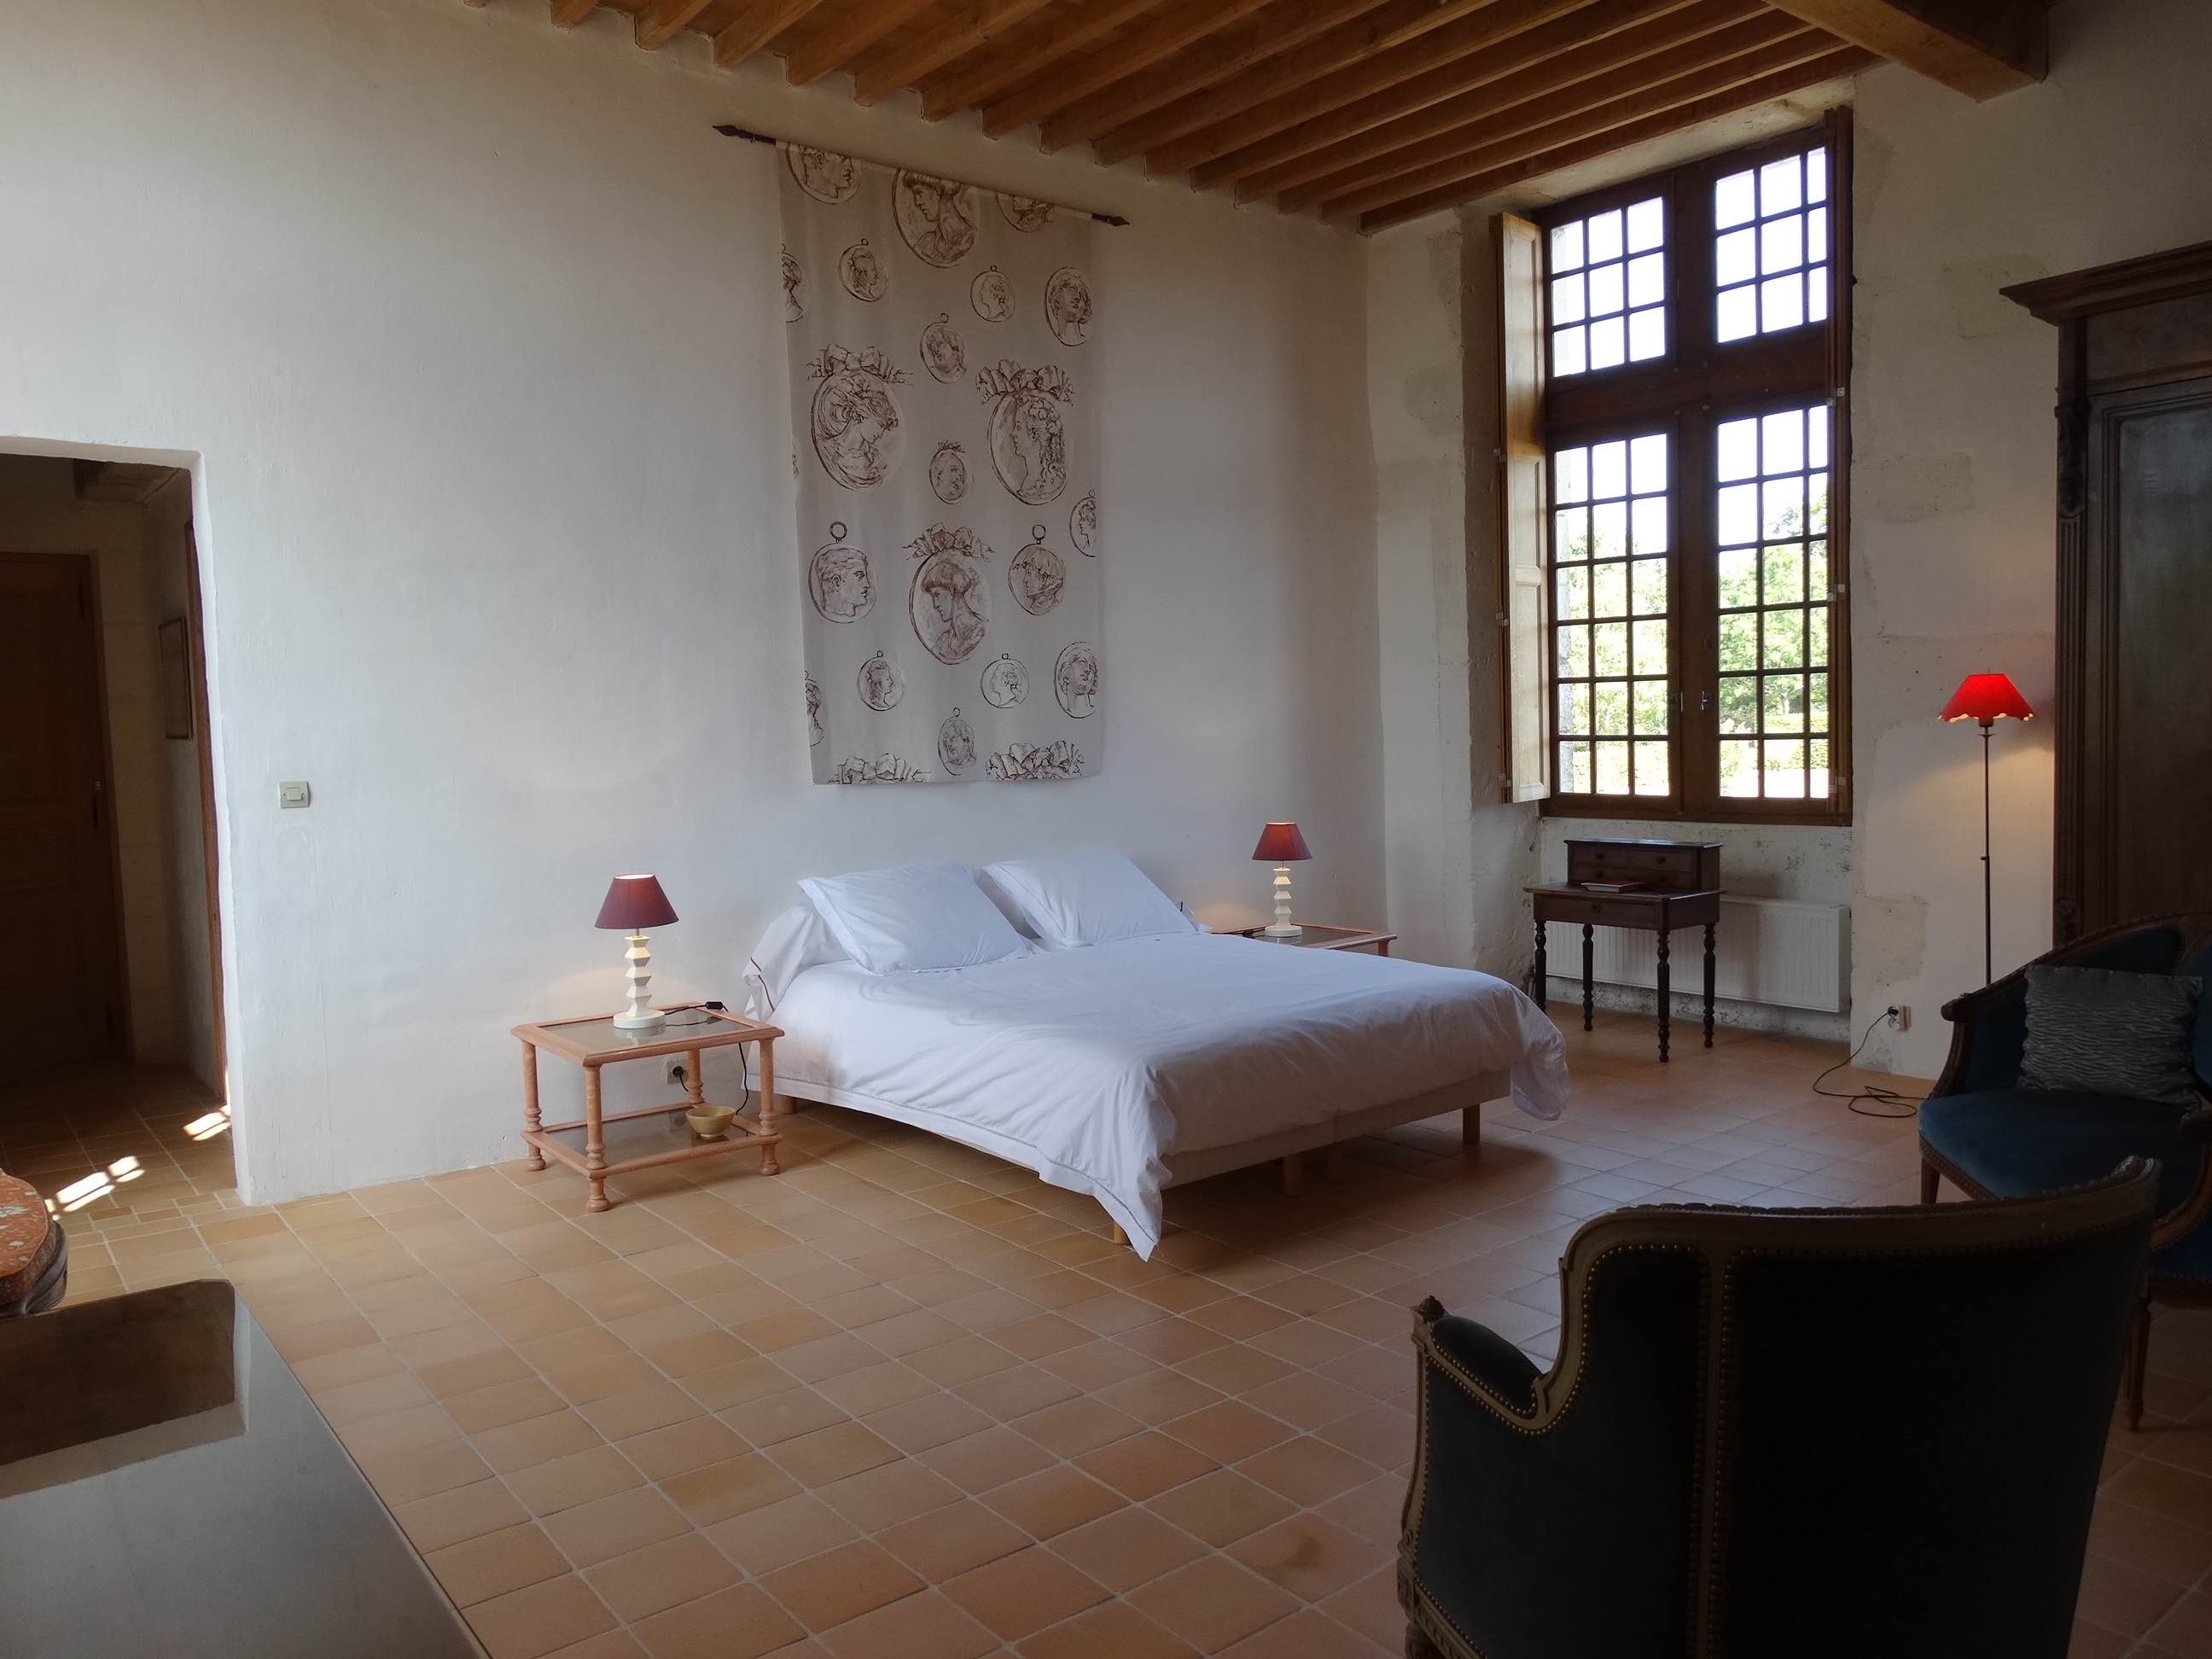 The Hippolyte's room, manor in Dordogne